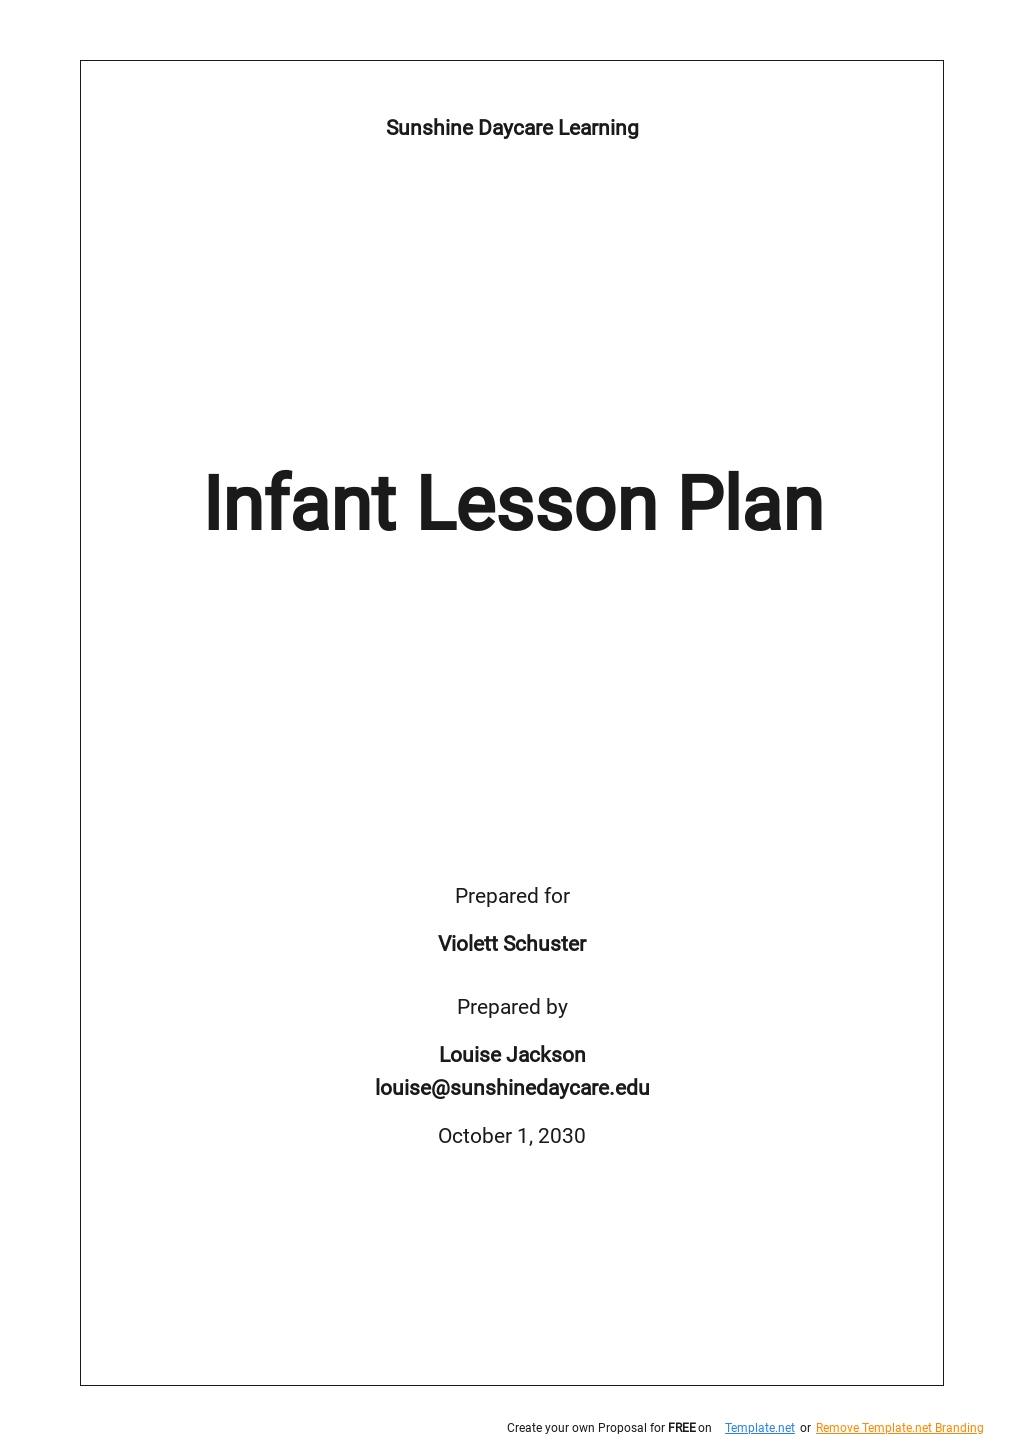 Infant Lesson Plan Template.jpe